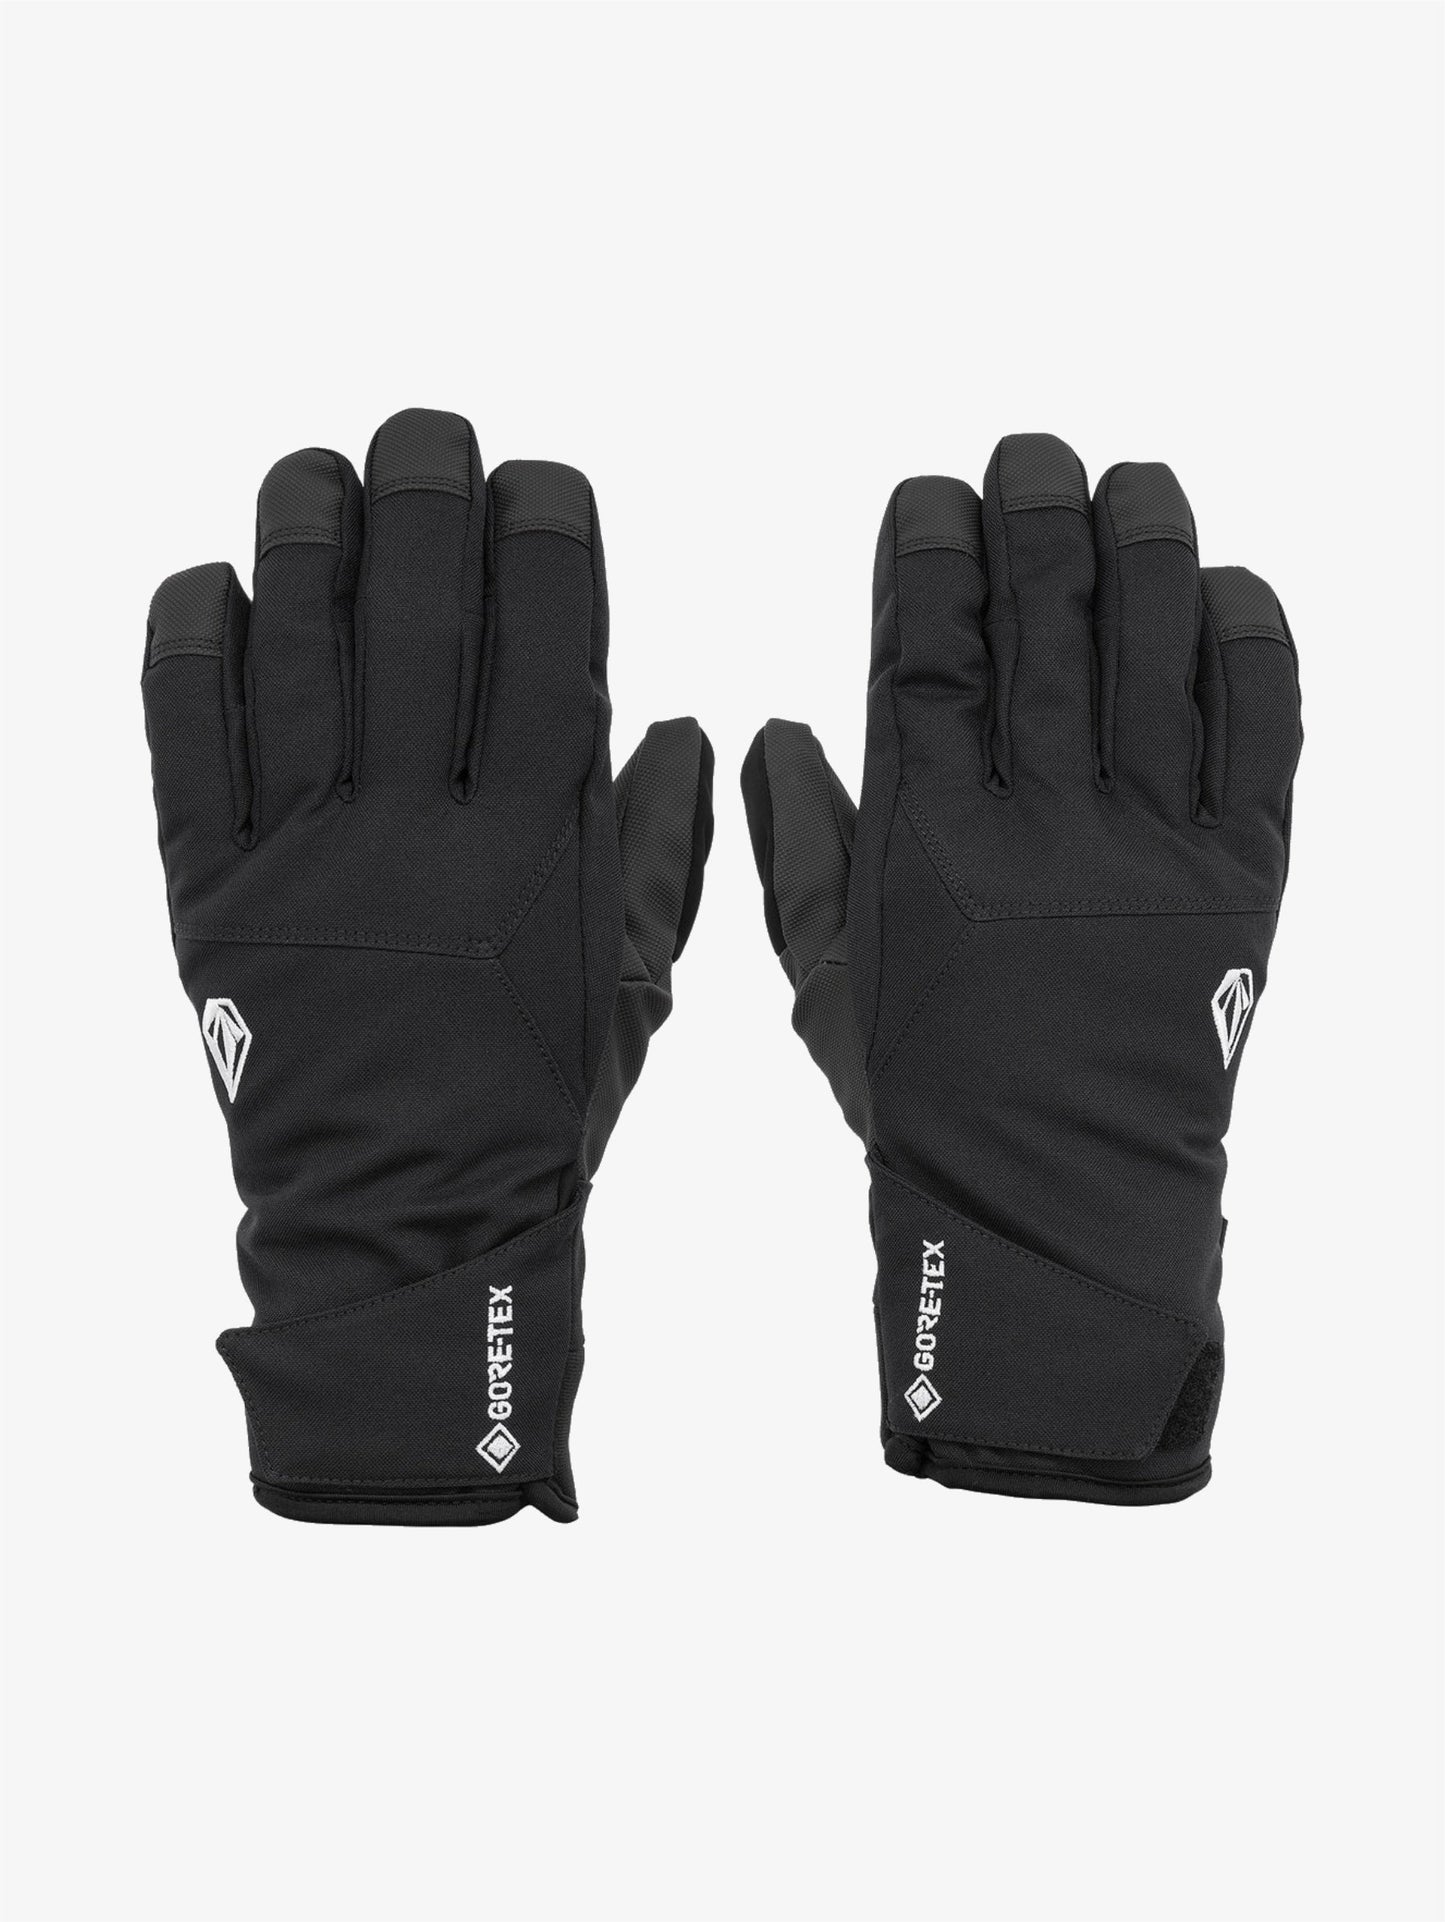 CP2 Gore-Tex snowboard / ski gloves black